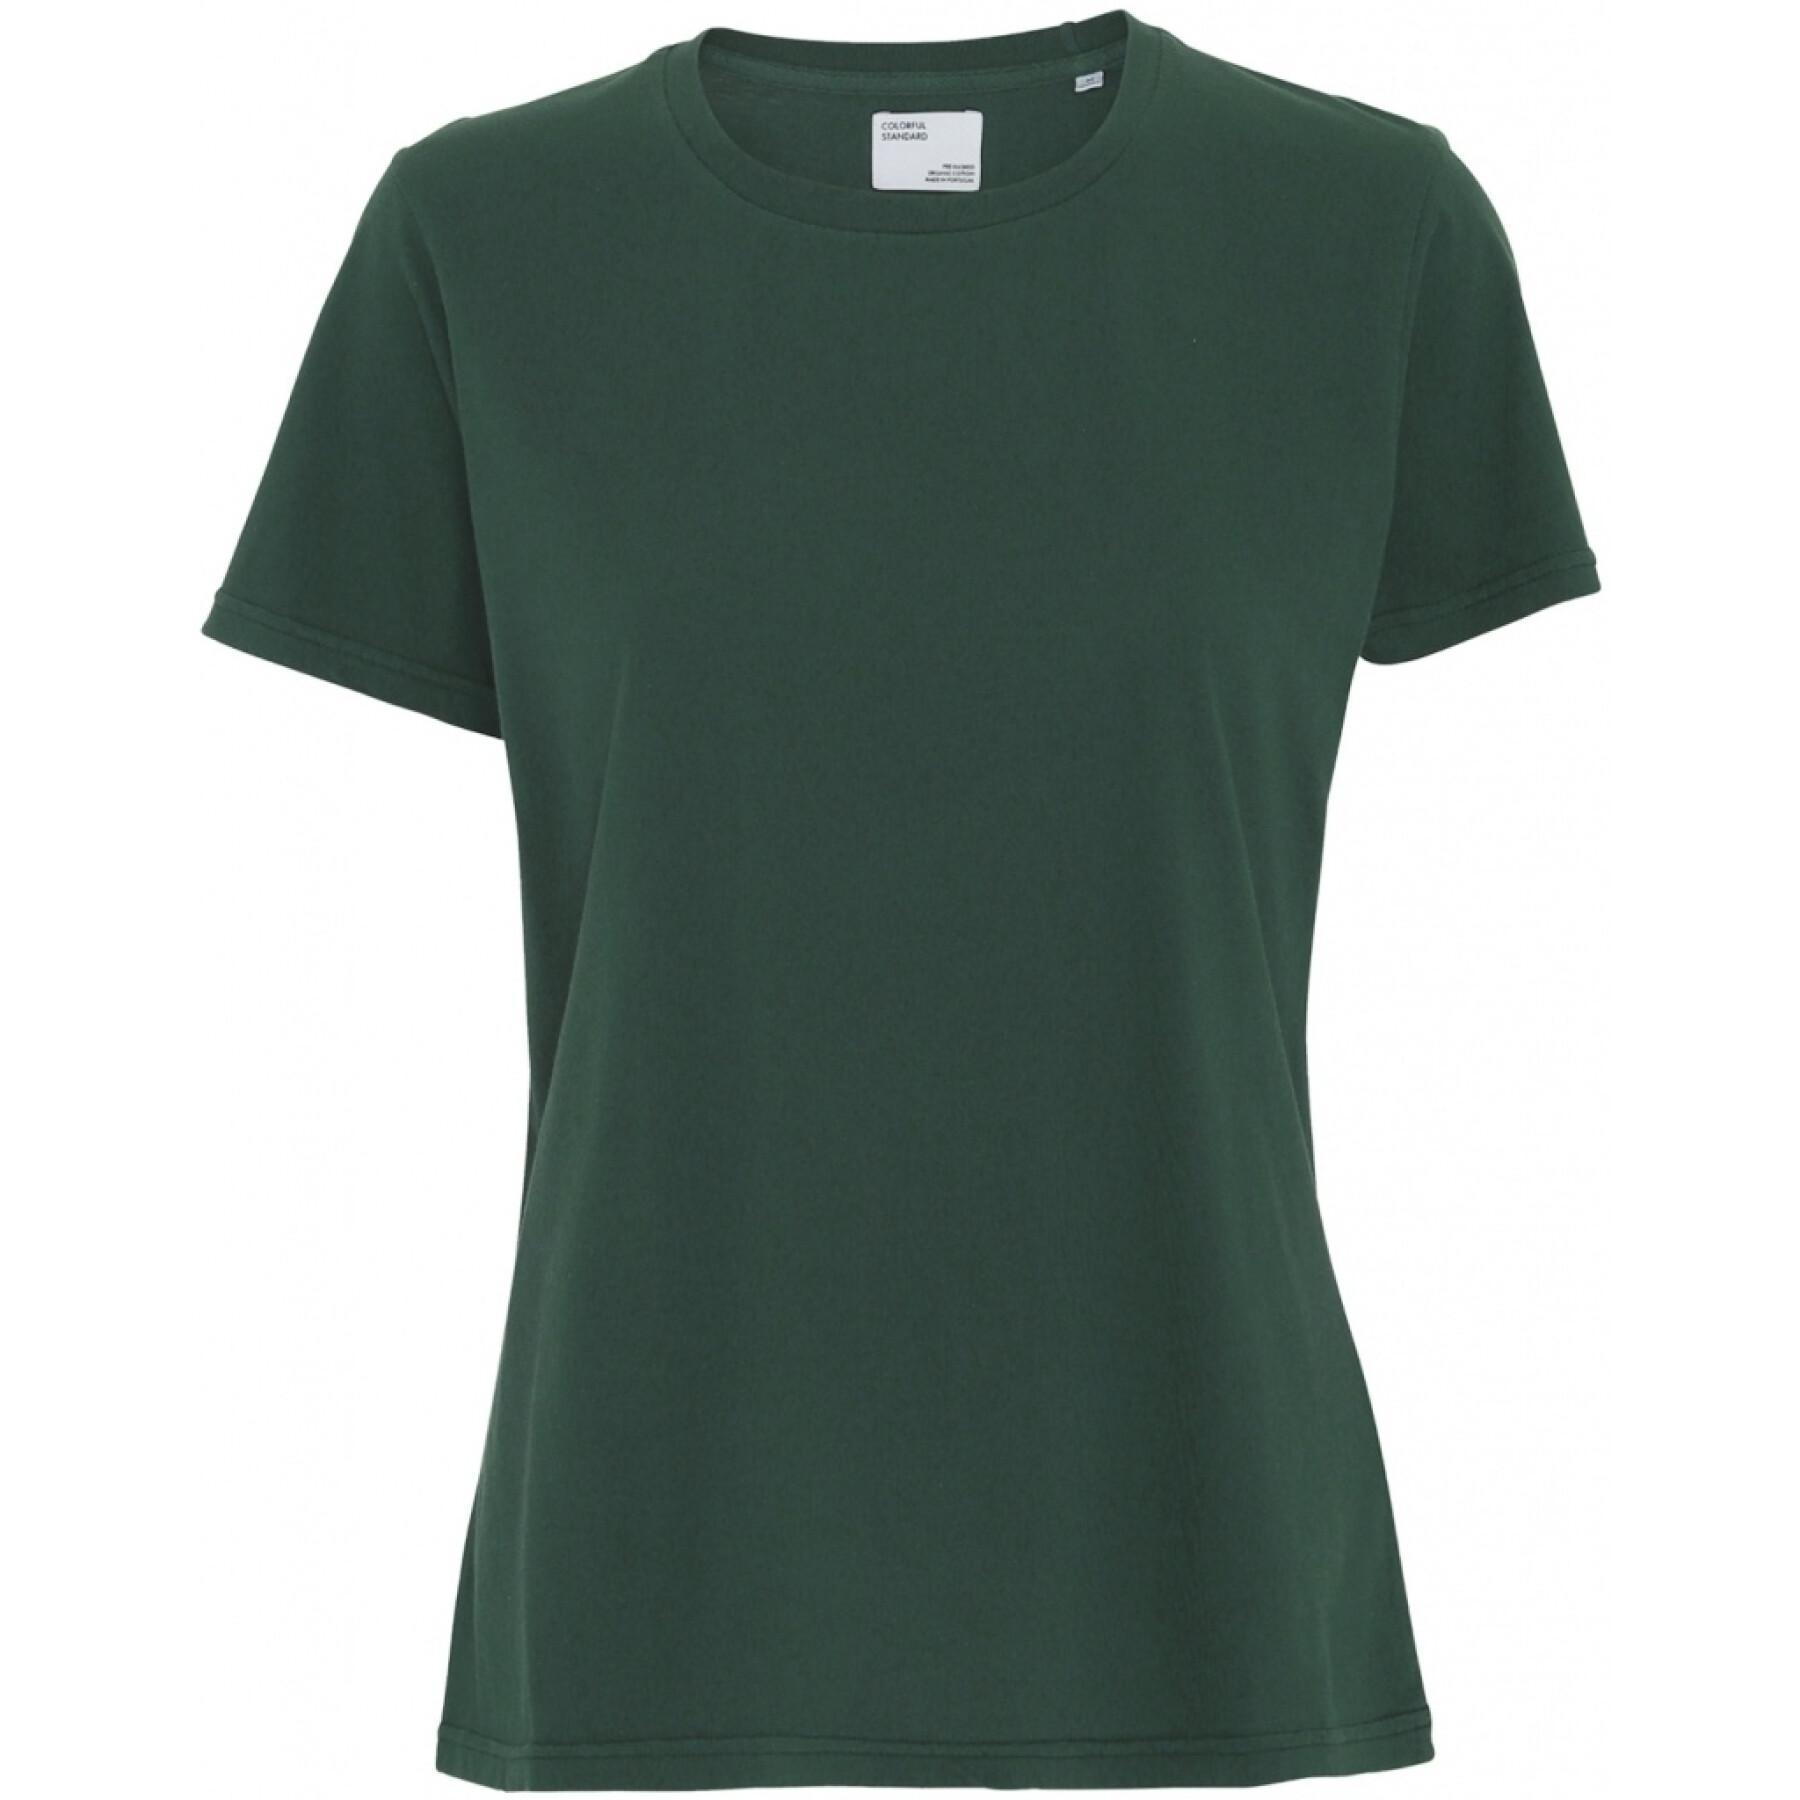 Maglietta da donna Colorful Standard Light Organic emerald green